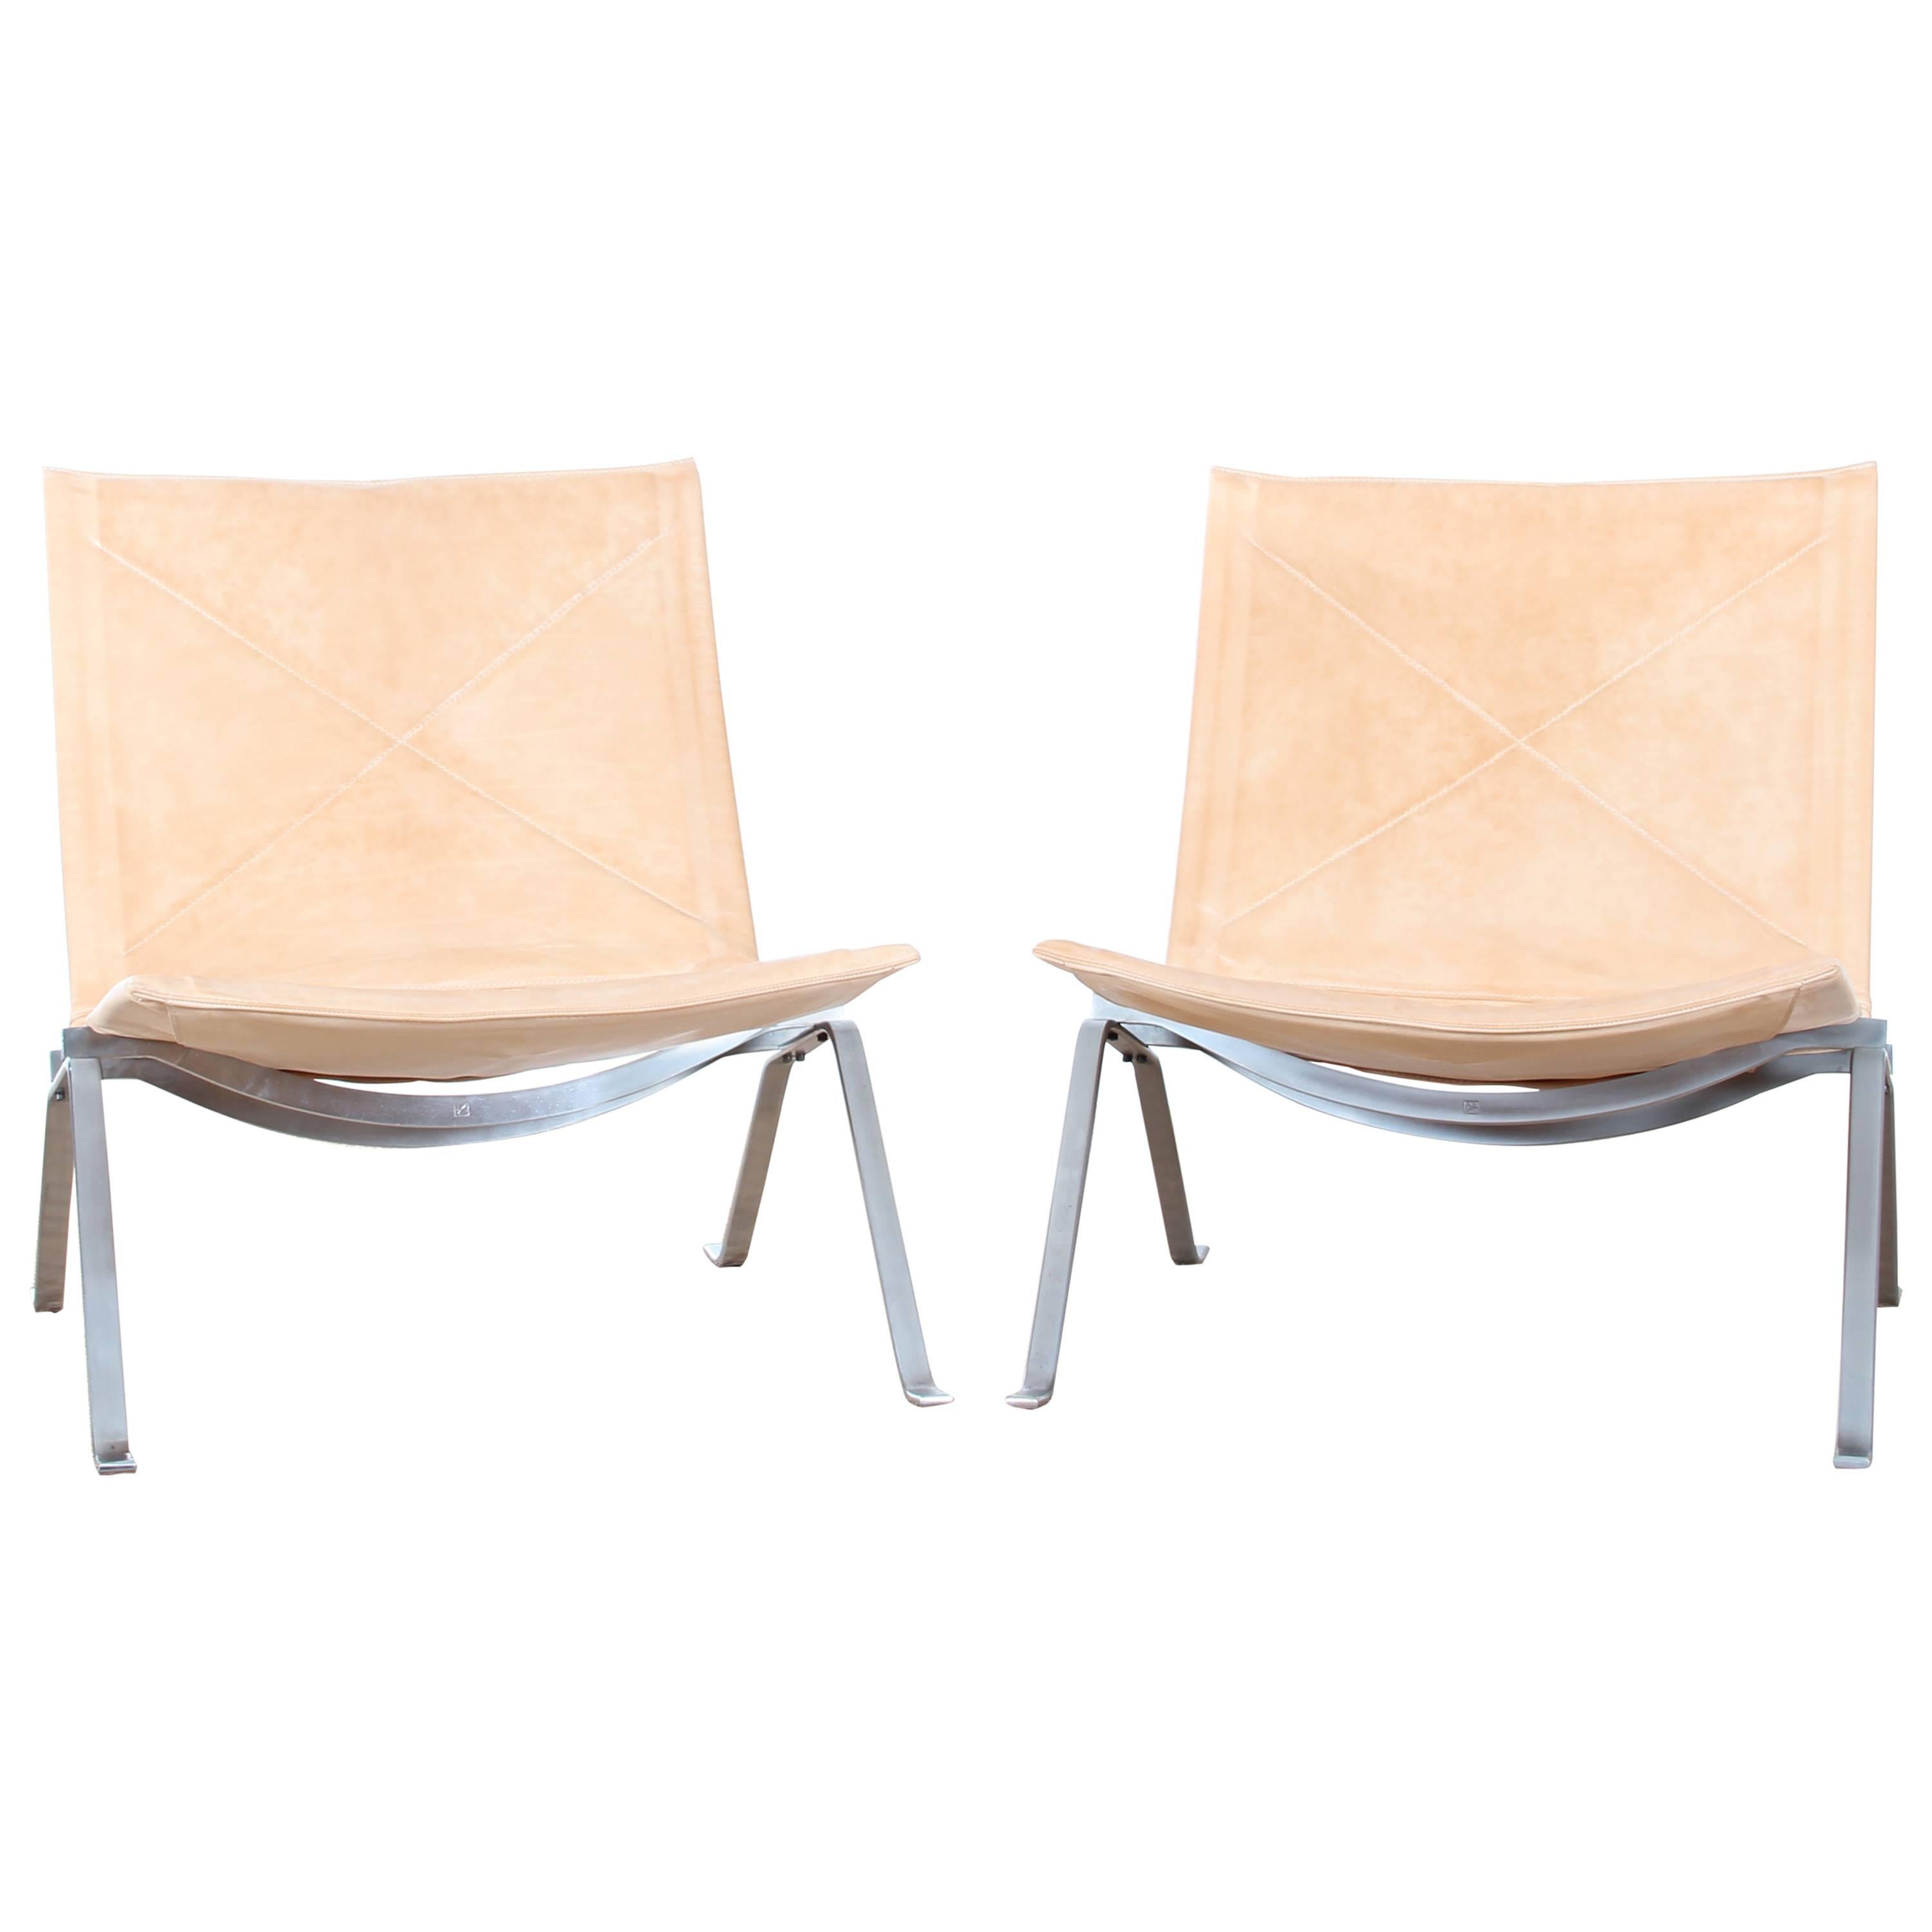 Mid-Century Modern Pair of PK 22 Chairs by Poul Kjaerholm for Kold Christiansen